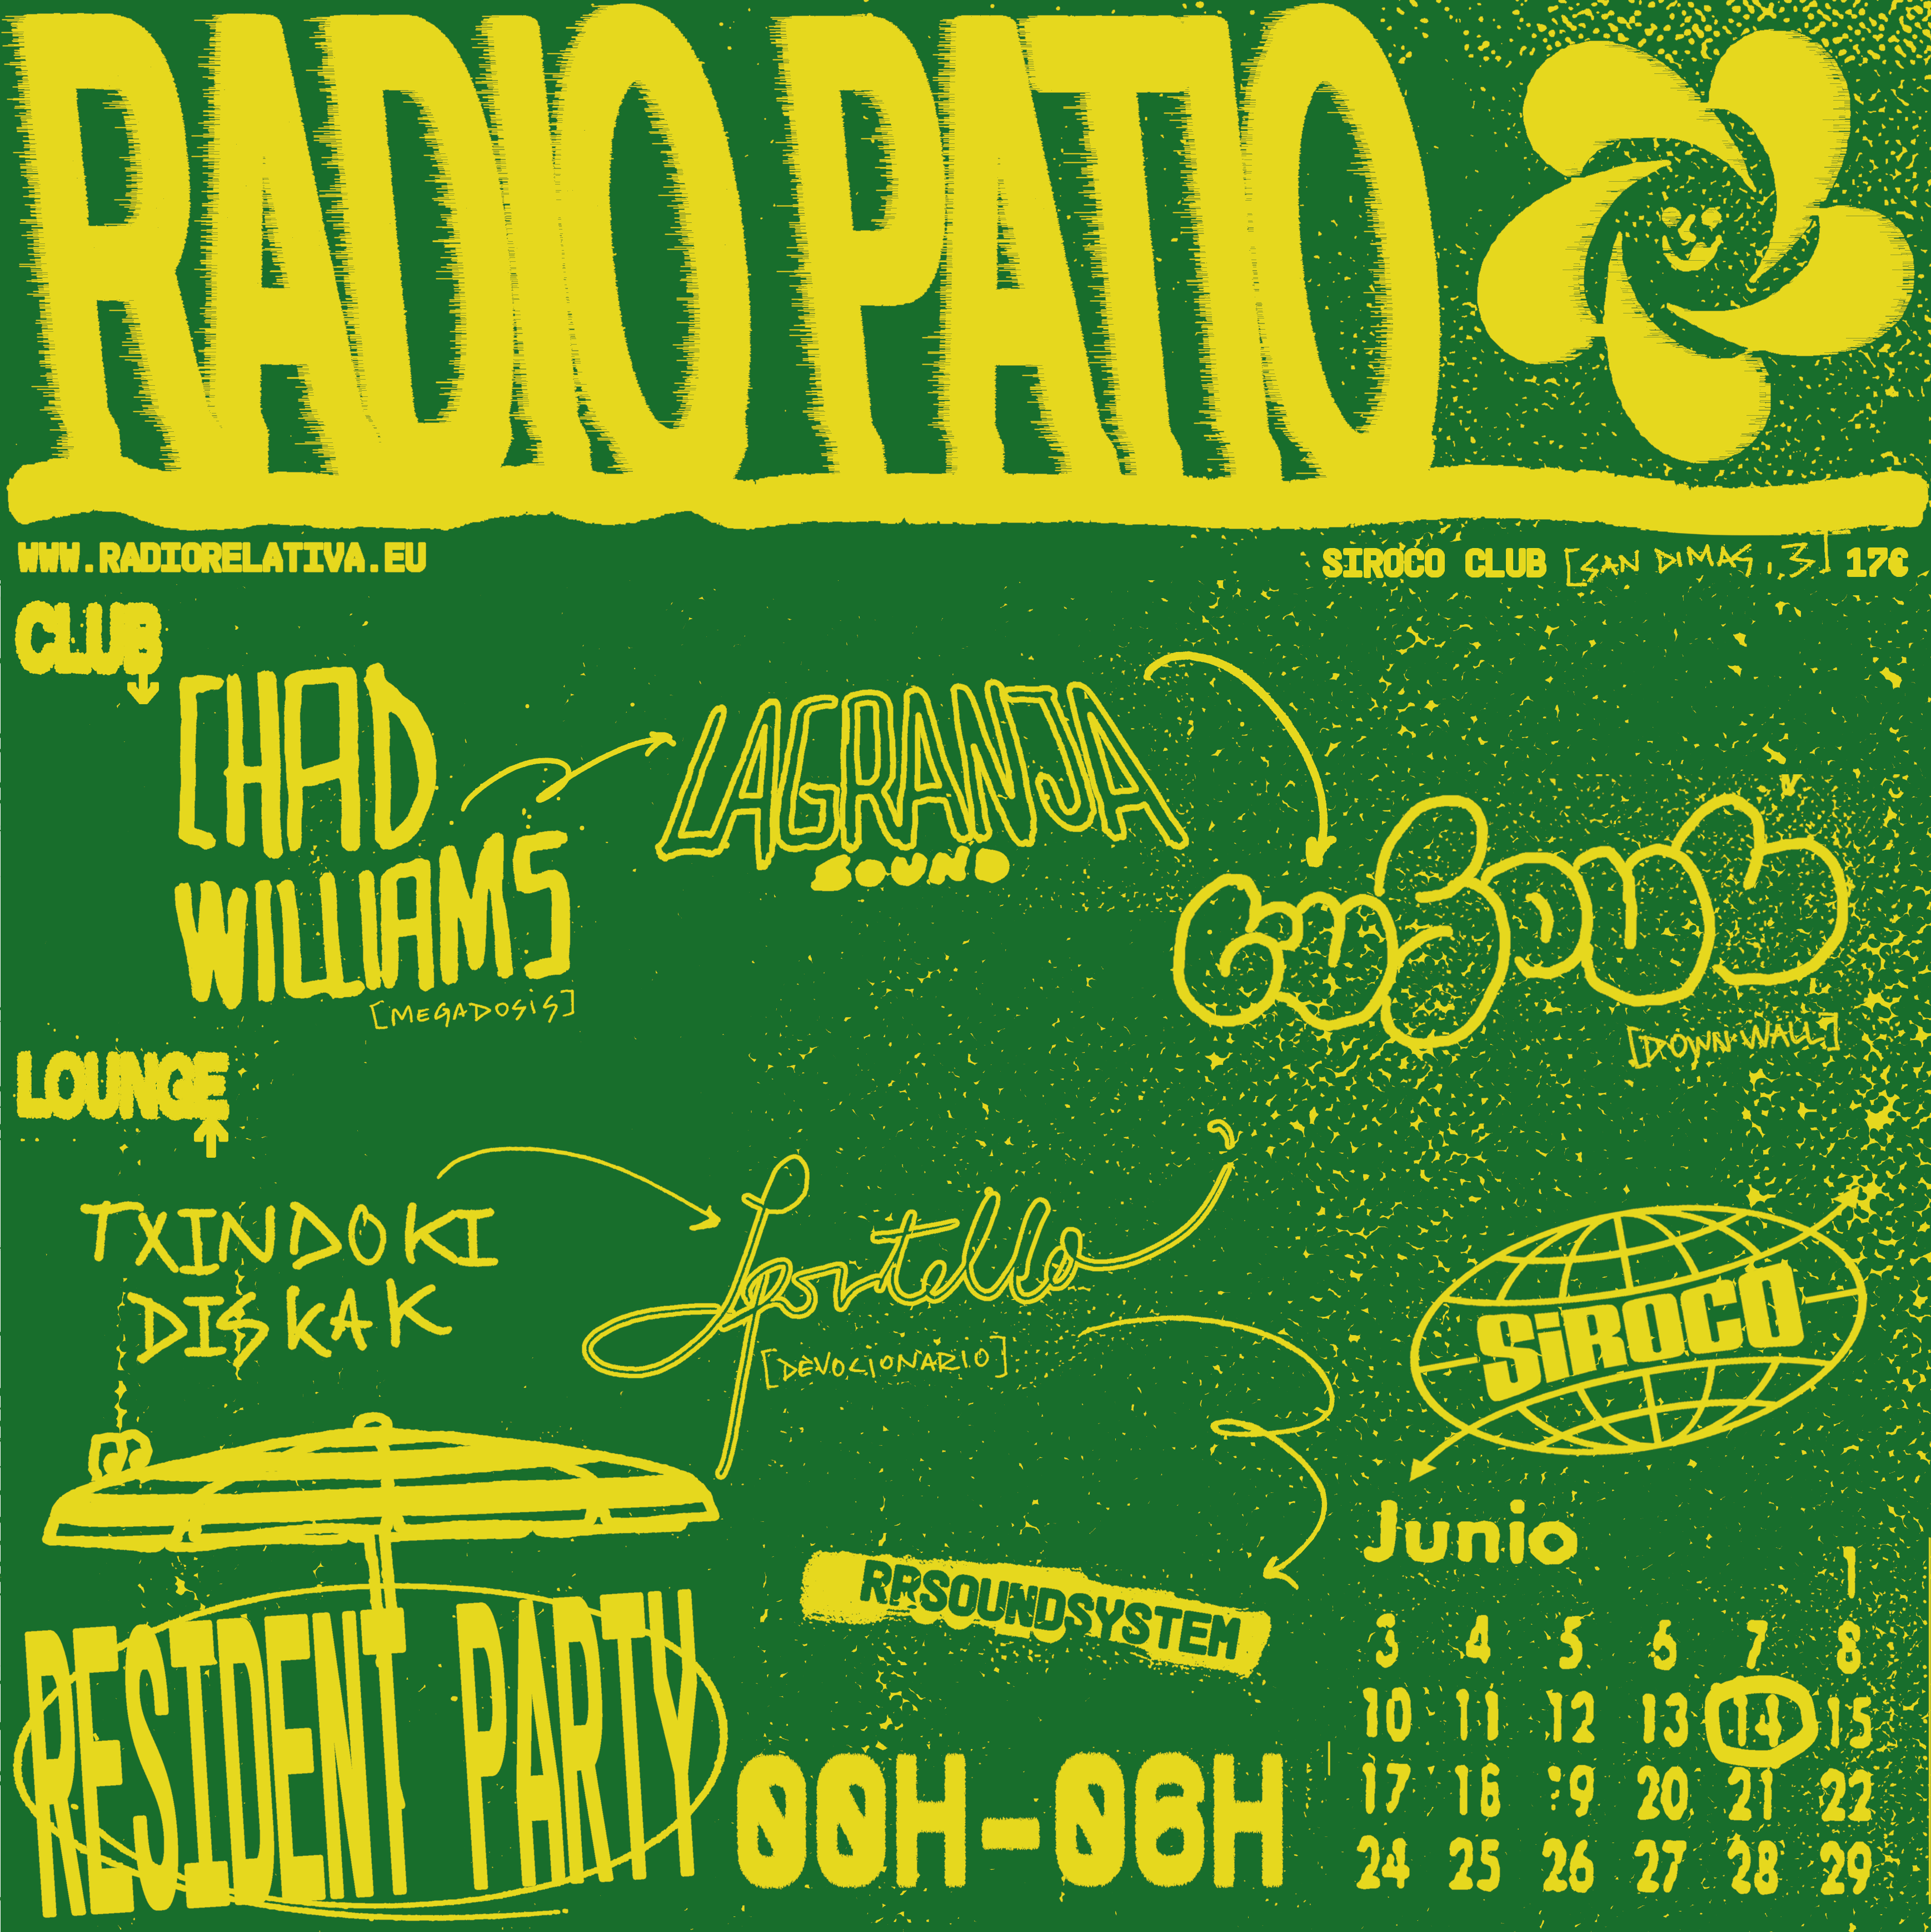 Radio Patio: Gusoul + Lagranjasound + Chad Williams